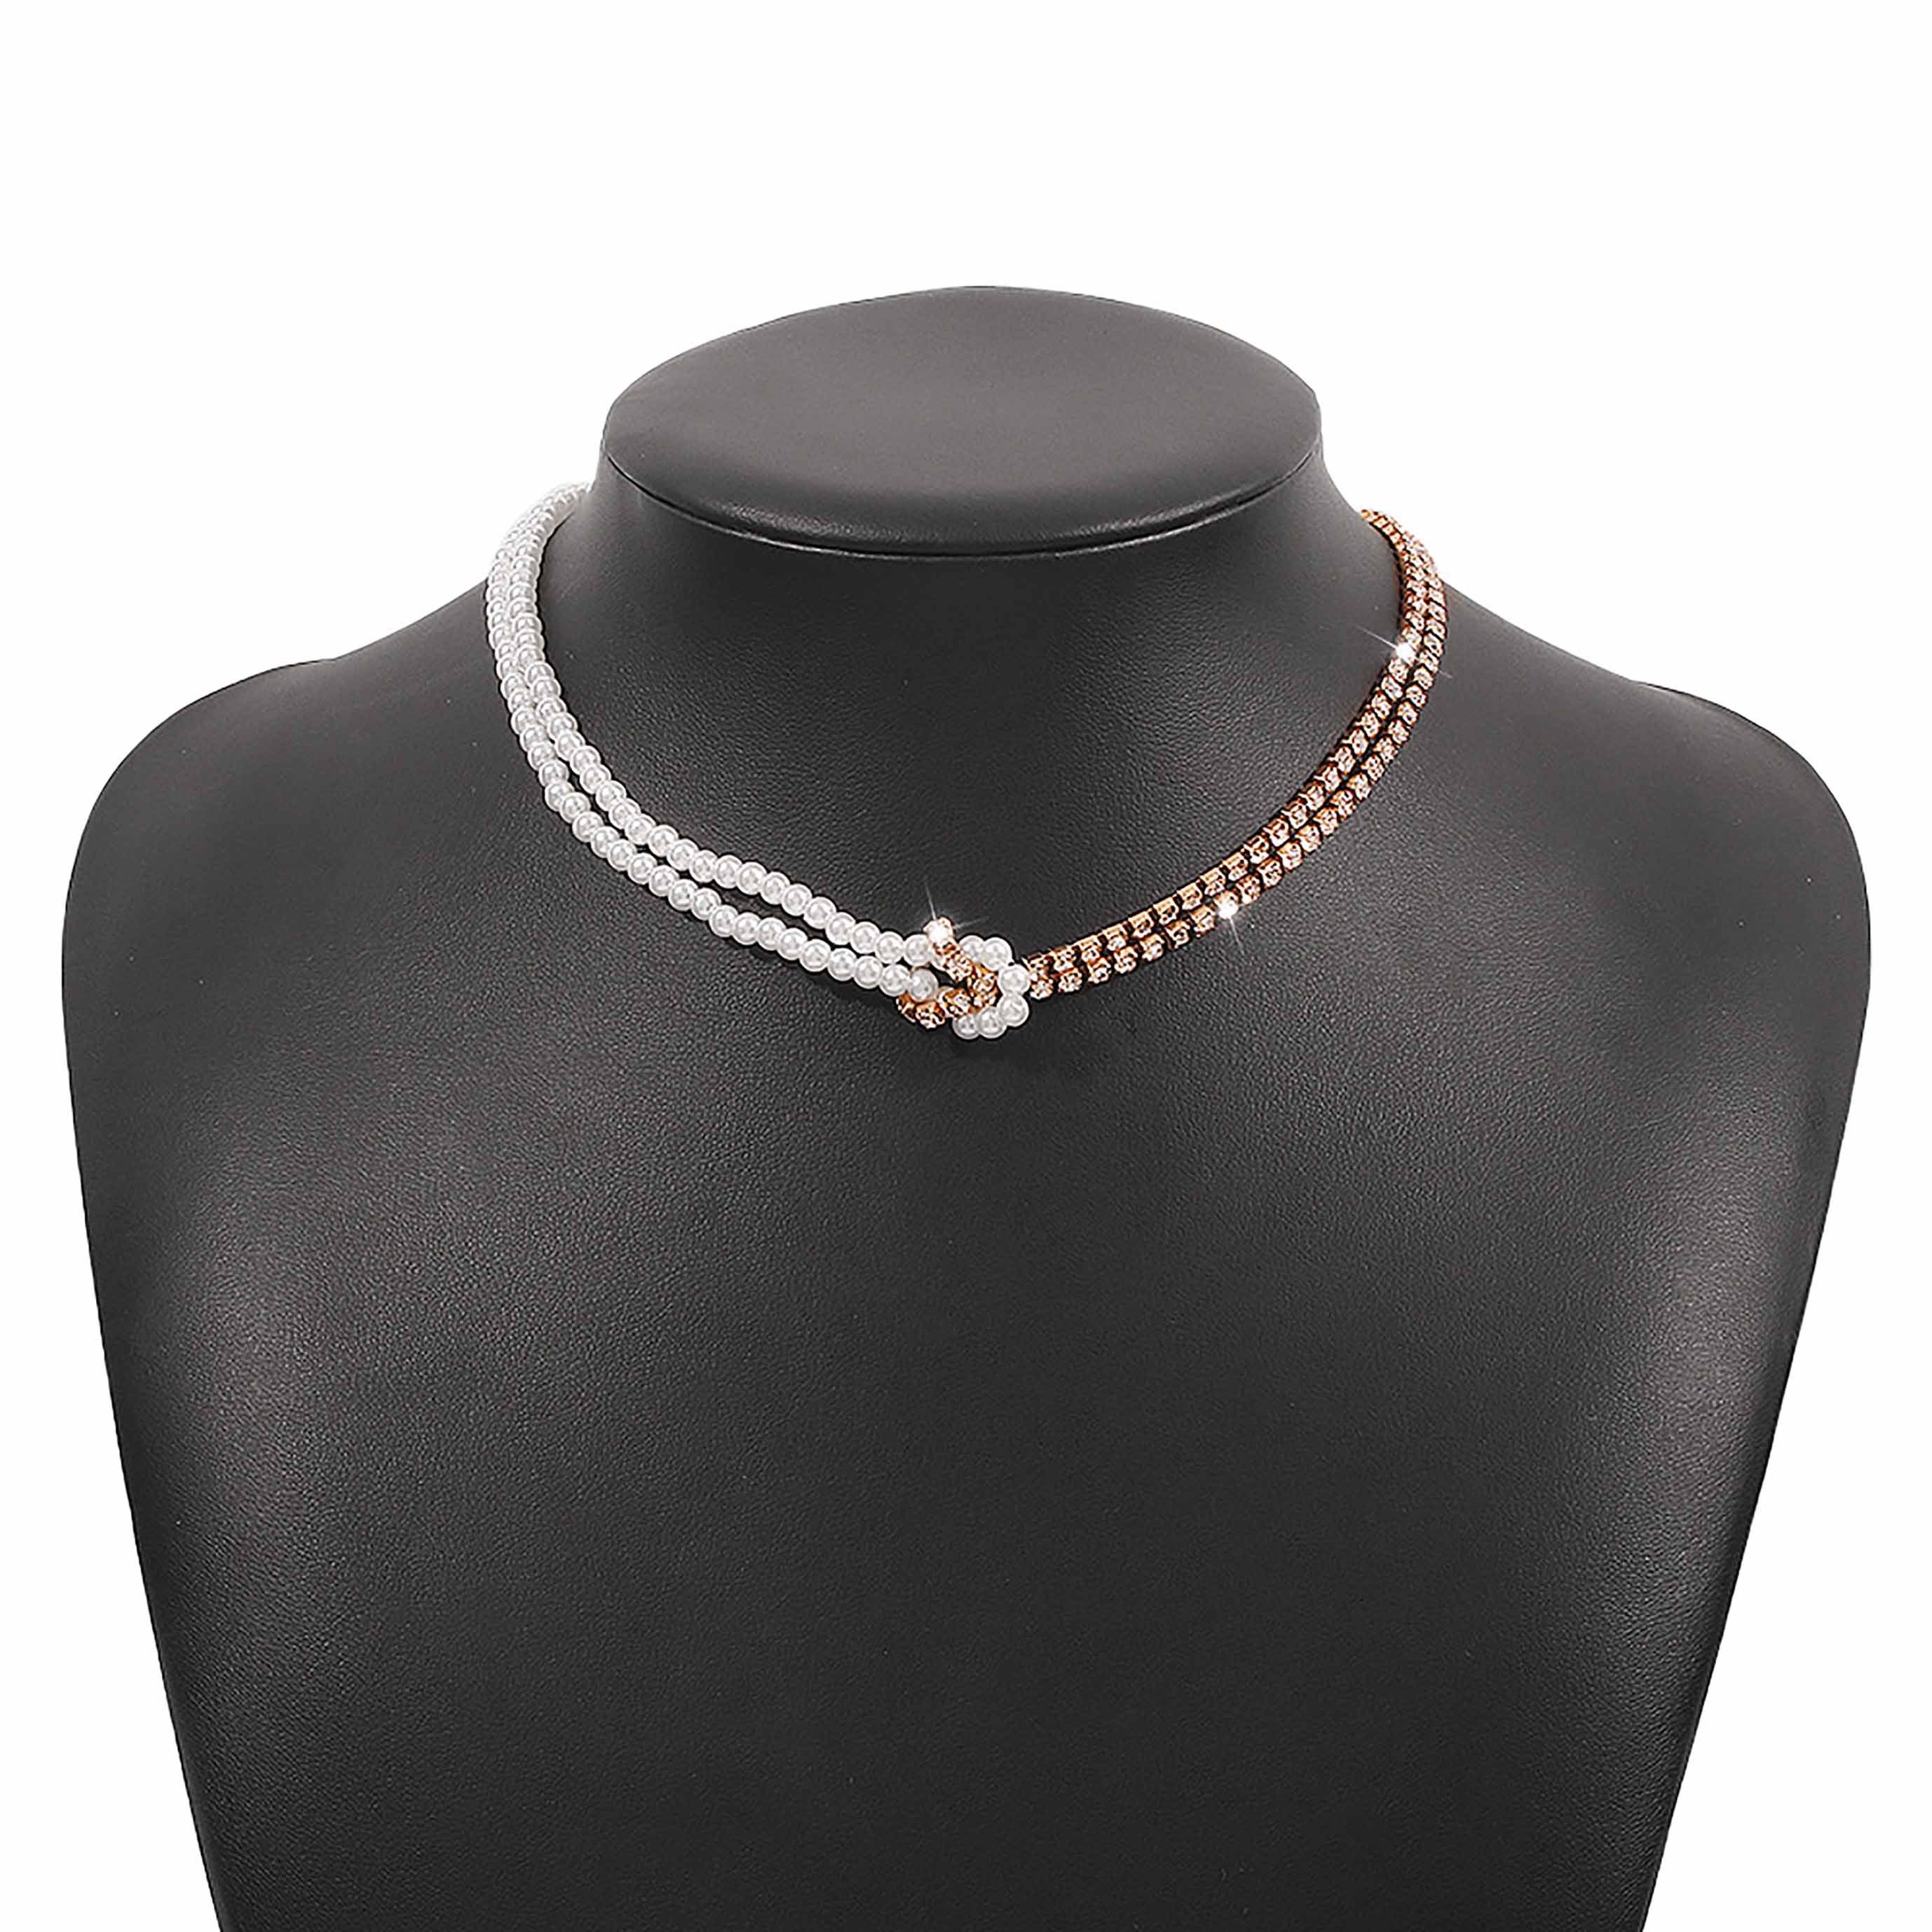 ineinandergreifende Perlenkette SRRINM Choker Halskette Kreative